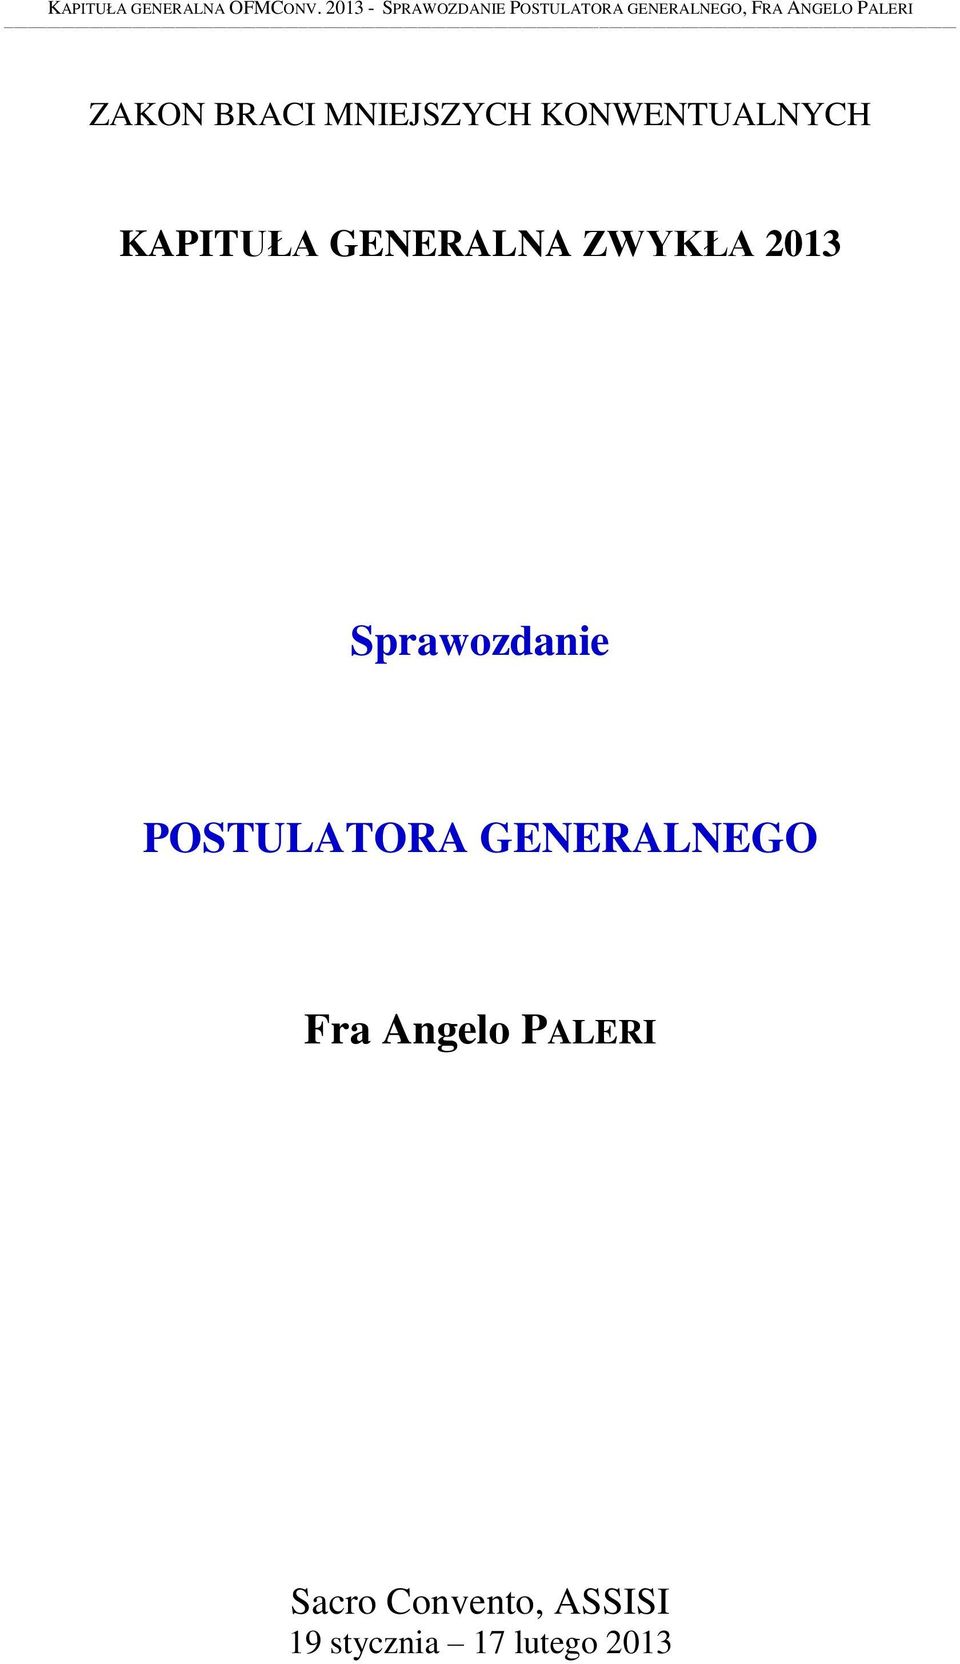 POSTULATORA GENERALNEGO Fra Angelo PALERI